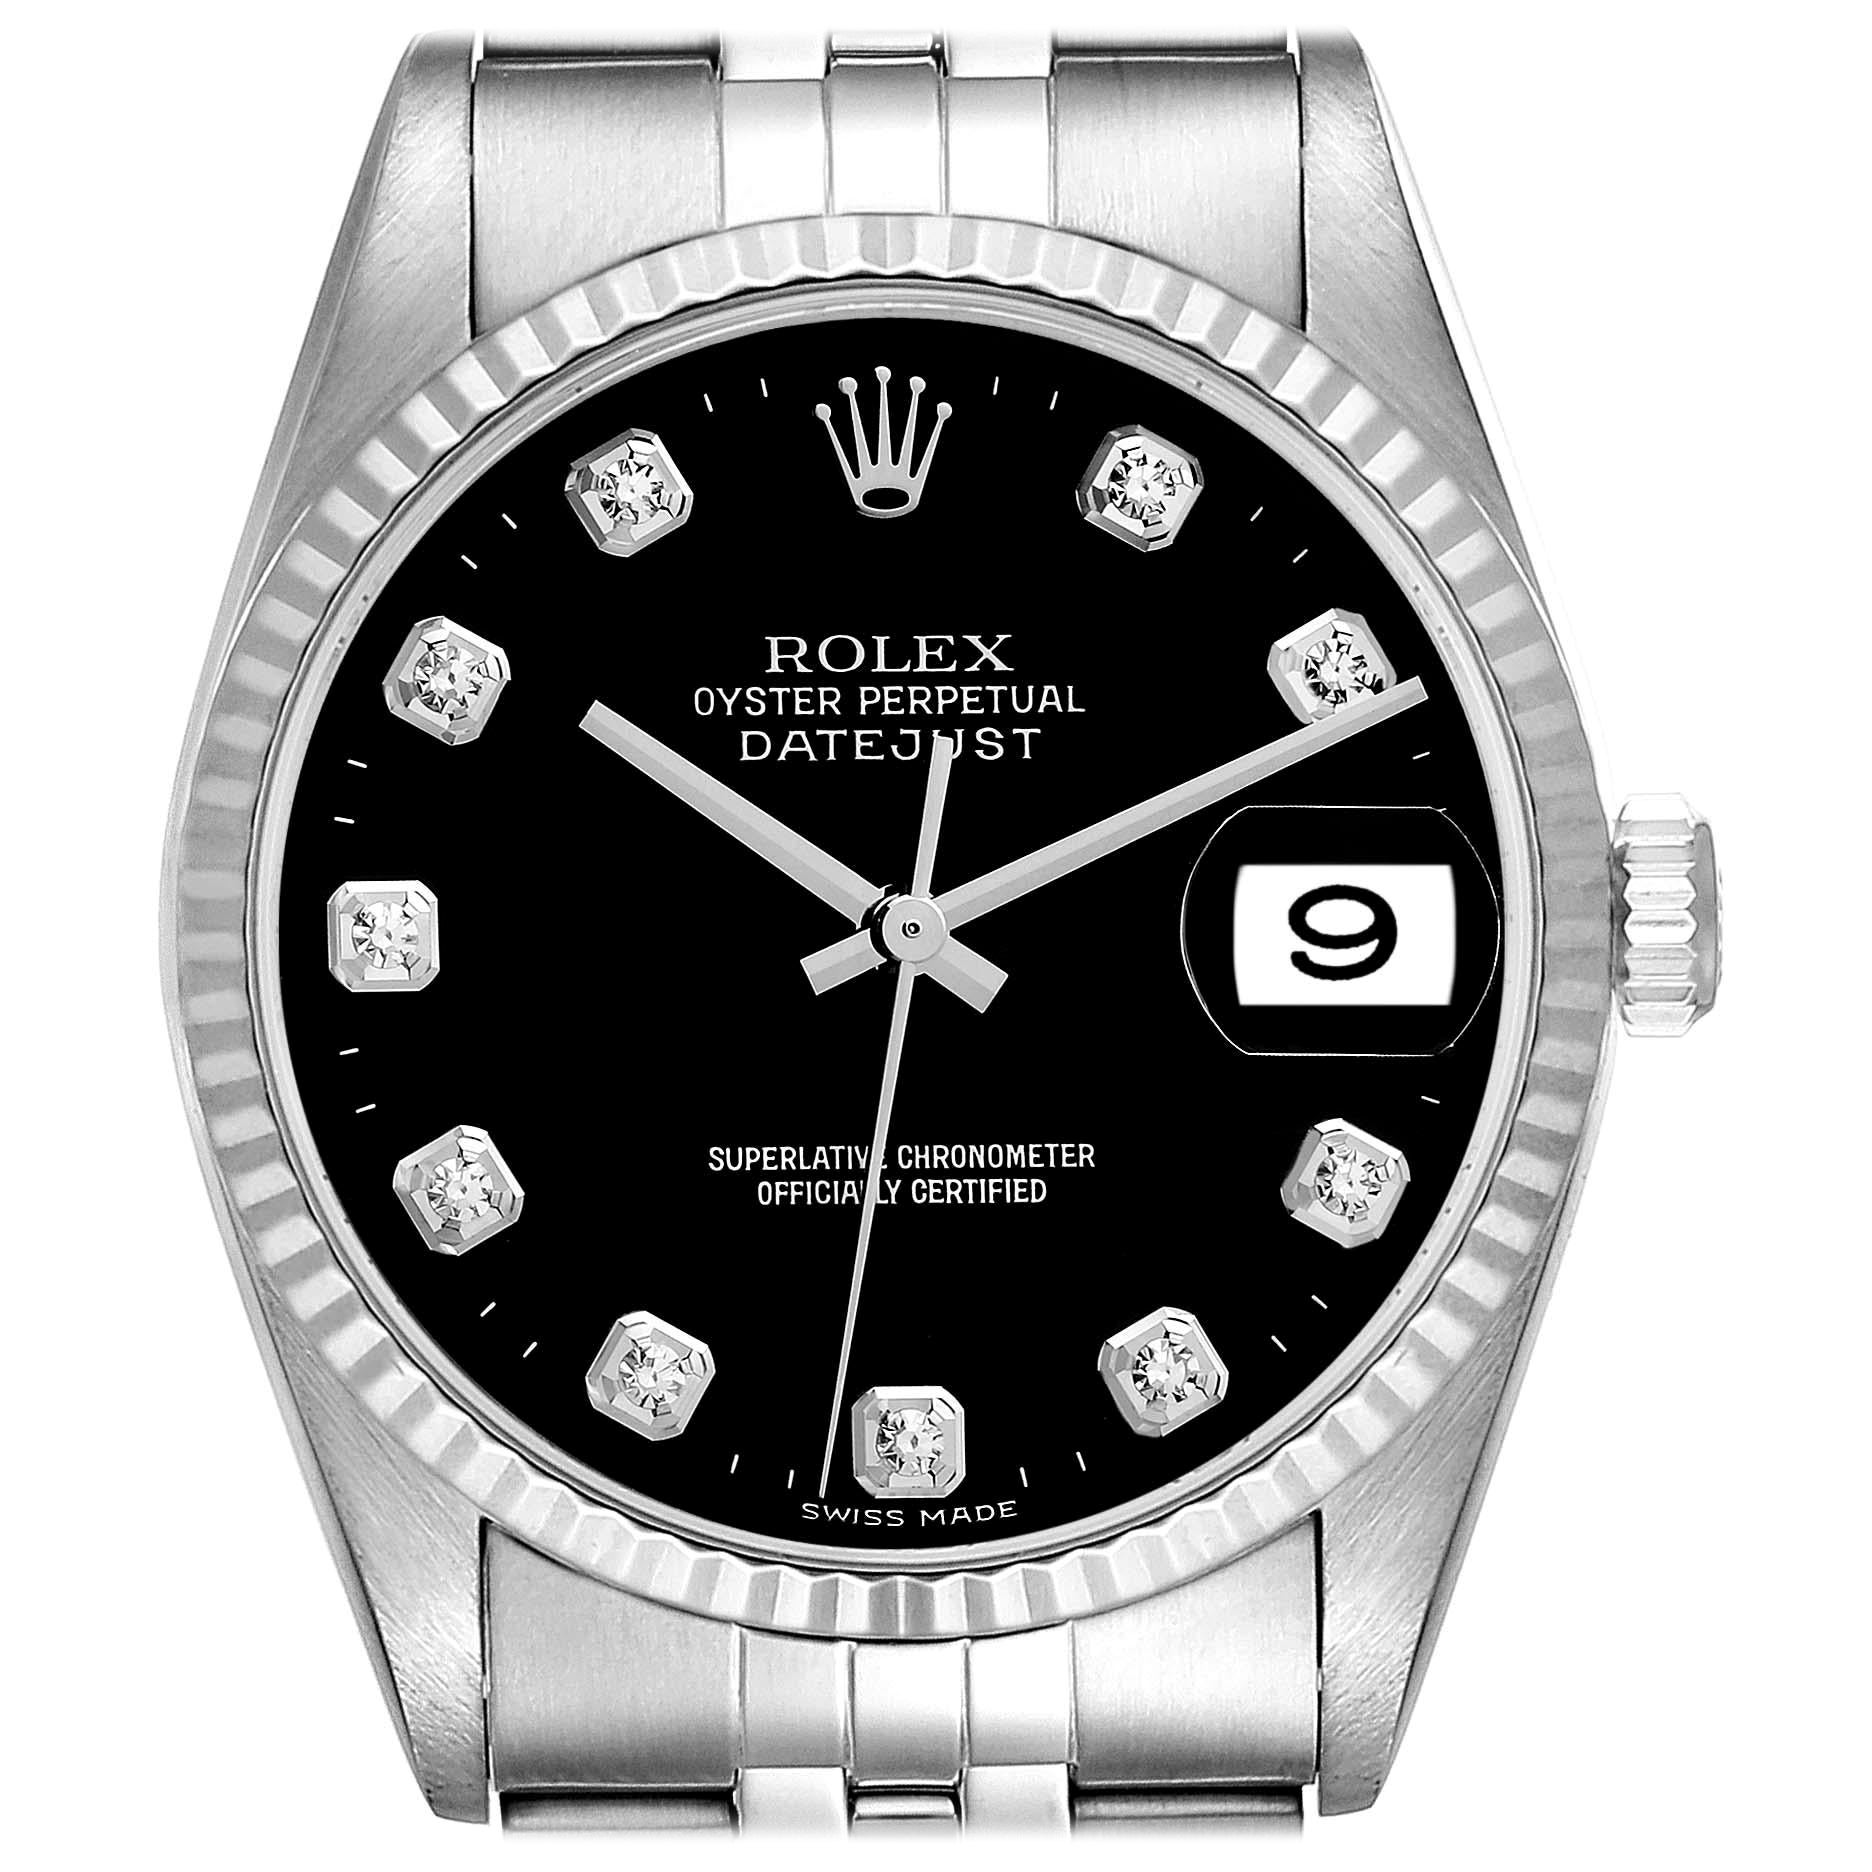 Rolex Datejust Steel White Gold Black Diamond Dial Mens Watch 16234